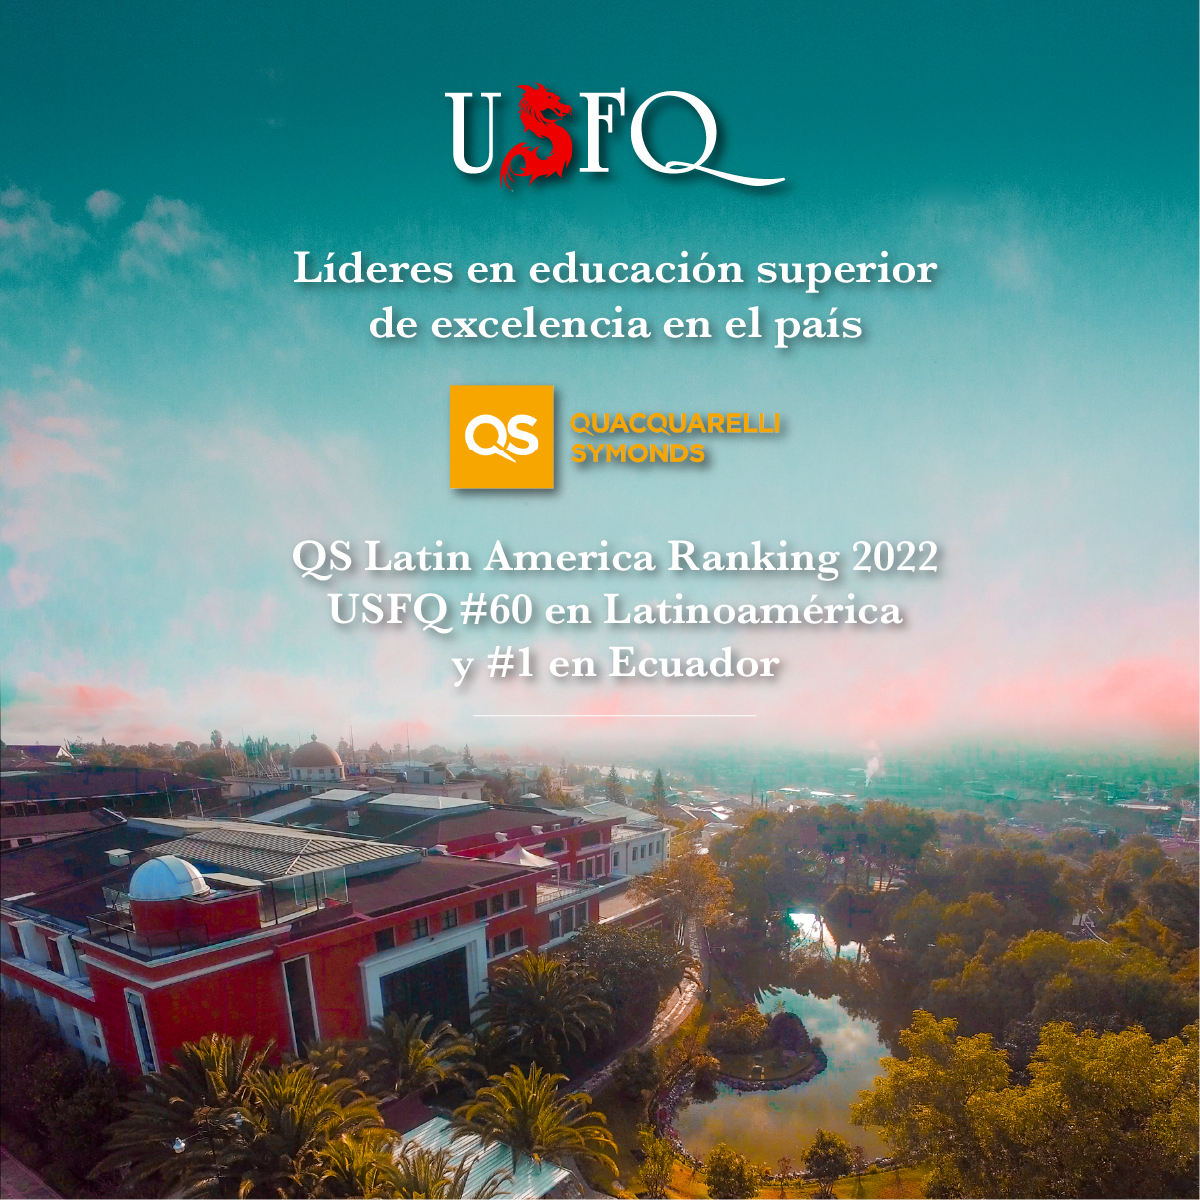 USFQ entre las 60 universidades más destacadas de América Latina